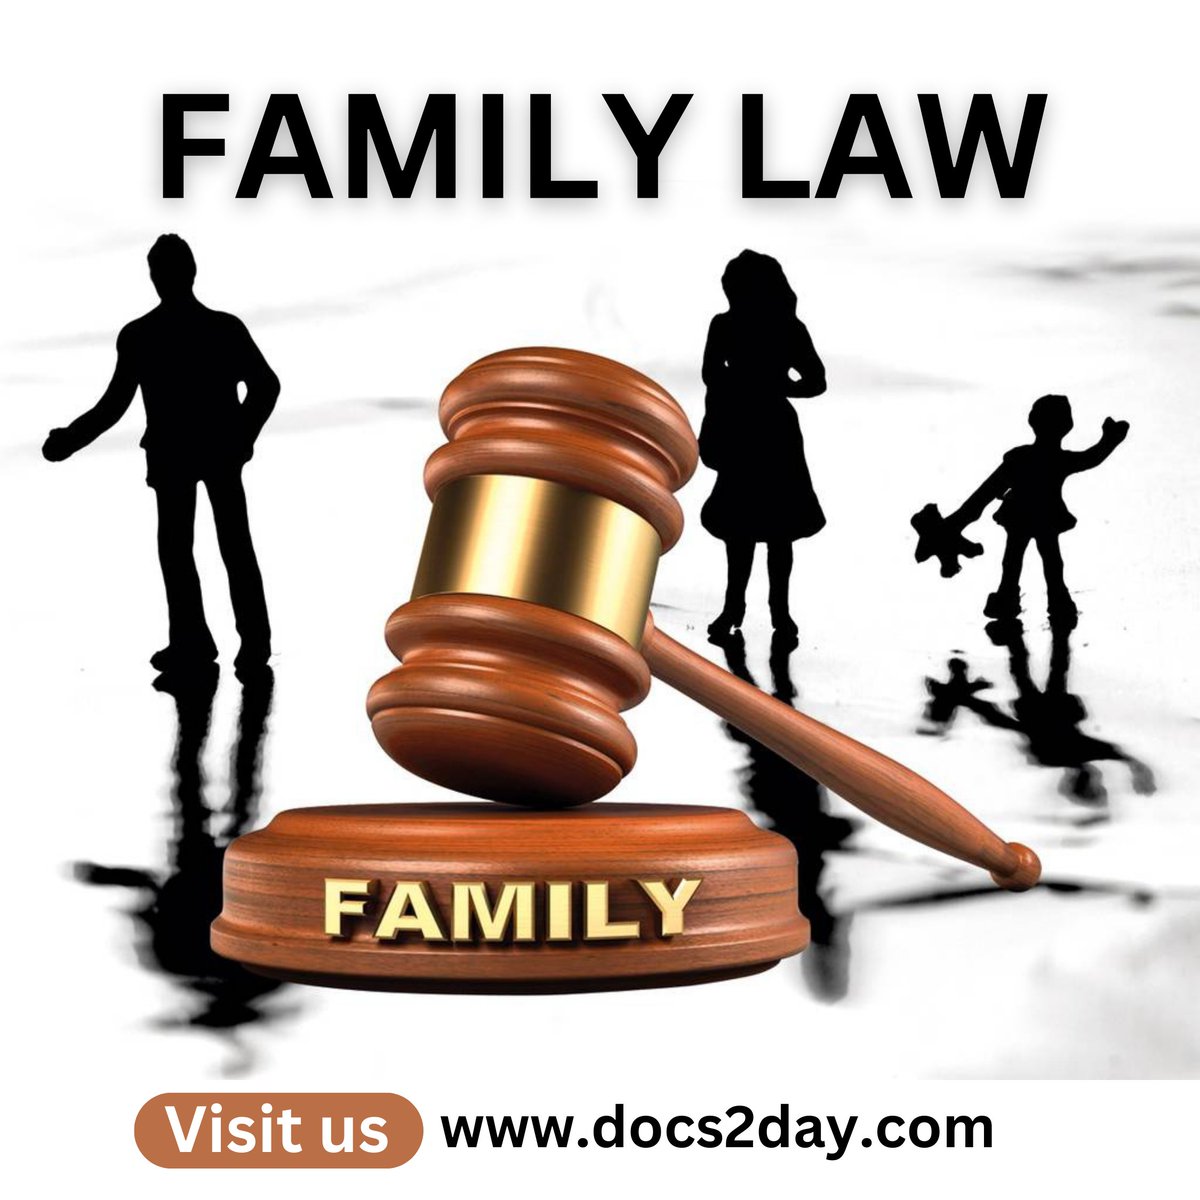 𝐅𝐀𝐌𝐈𝐋𝐘 𝐋𝐀𝐖

𝐕𝐢𝐬𝐢𝐭 𝐮𝐬: docs2day.com

#FamilyLaw #Divorce #ChildCustody #Alimony #ChildSupport #DomesticViolence #PrenuptialAgreement #MarriageCounseling #Adoption #GrandparentsRights #SameSexMarriage #FosterCare #ParentalRights #LegalSeparation